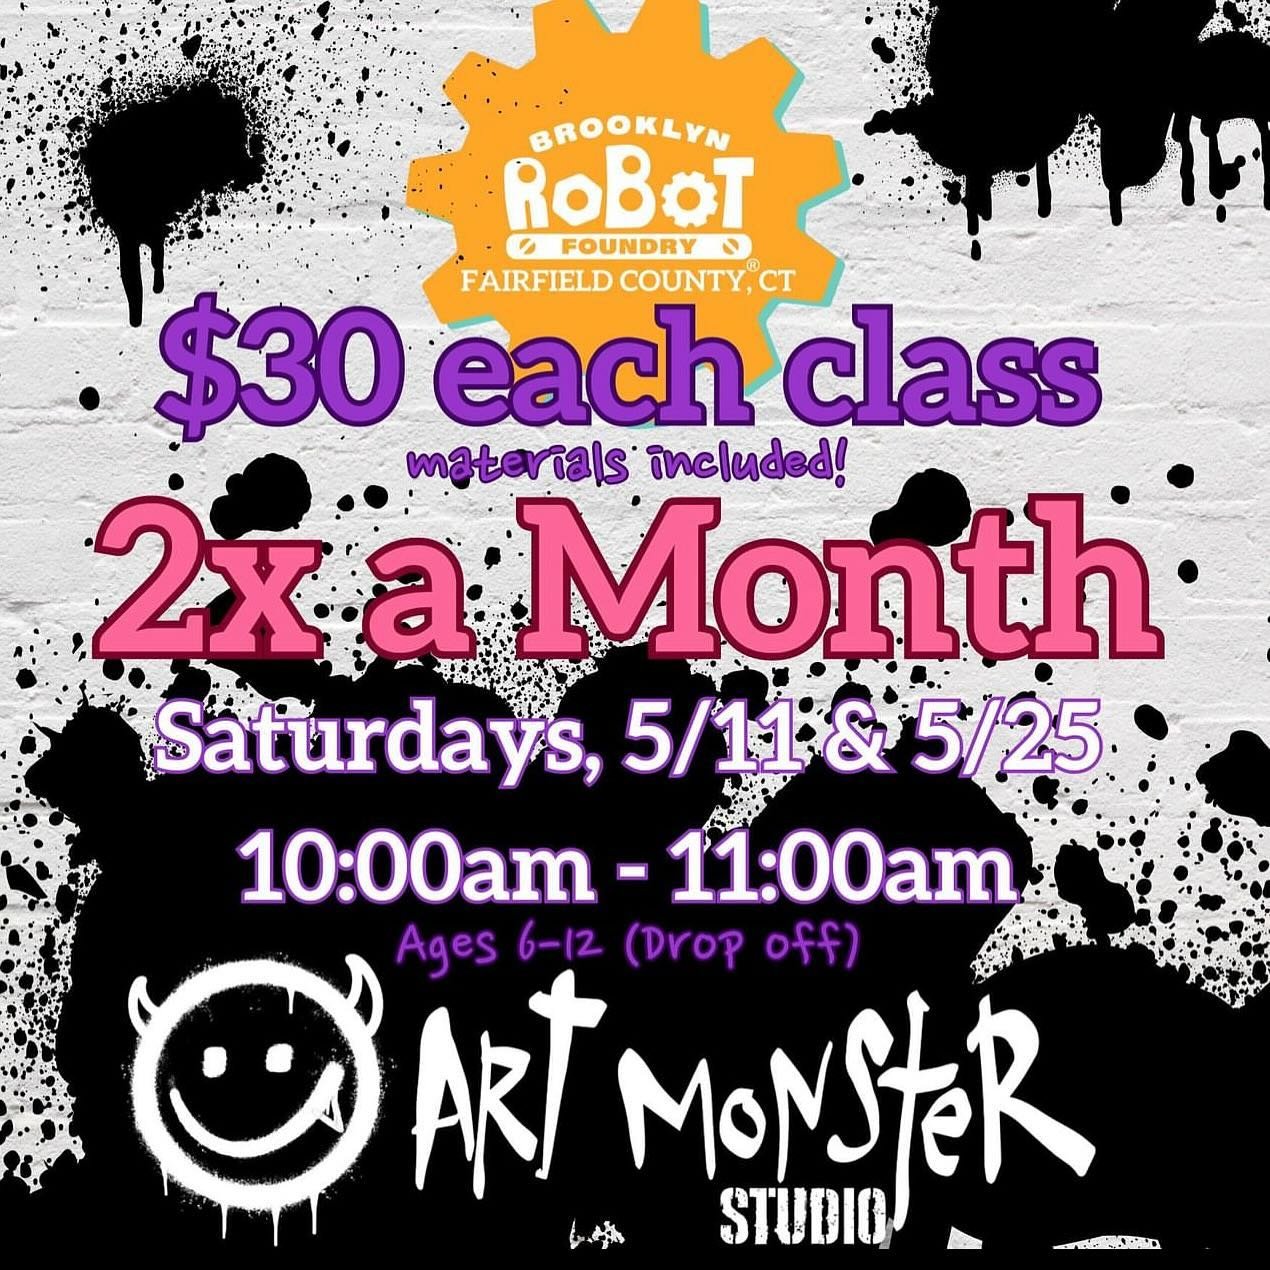 Let&rsquo;s go! Art Monster x @brooklynrobotfairfieldct workshop this Saturday!